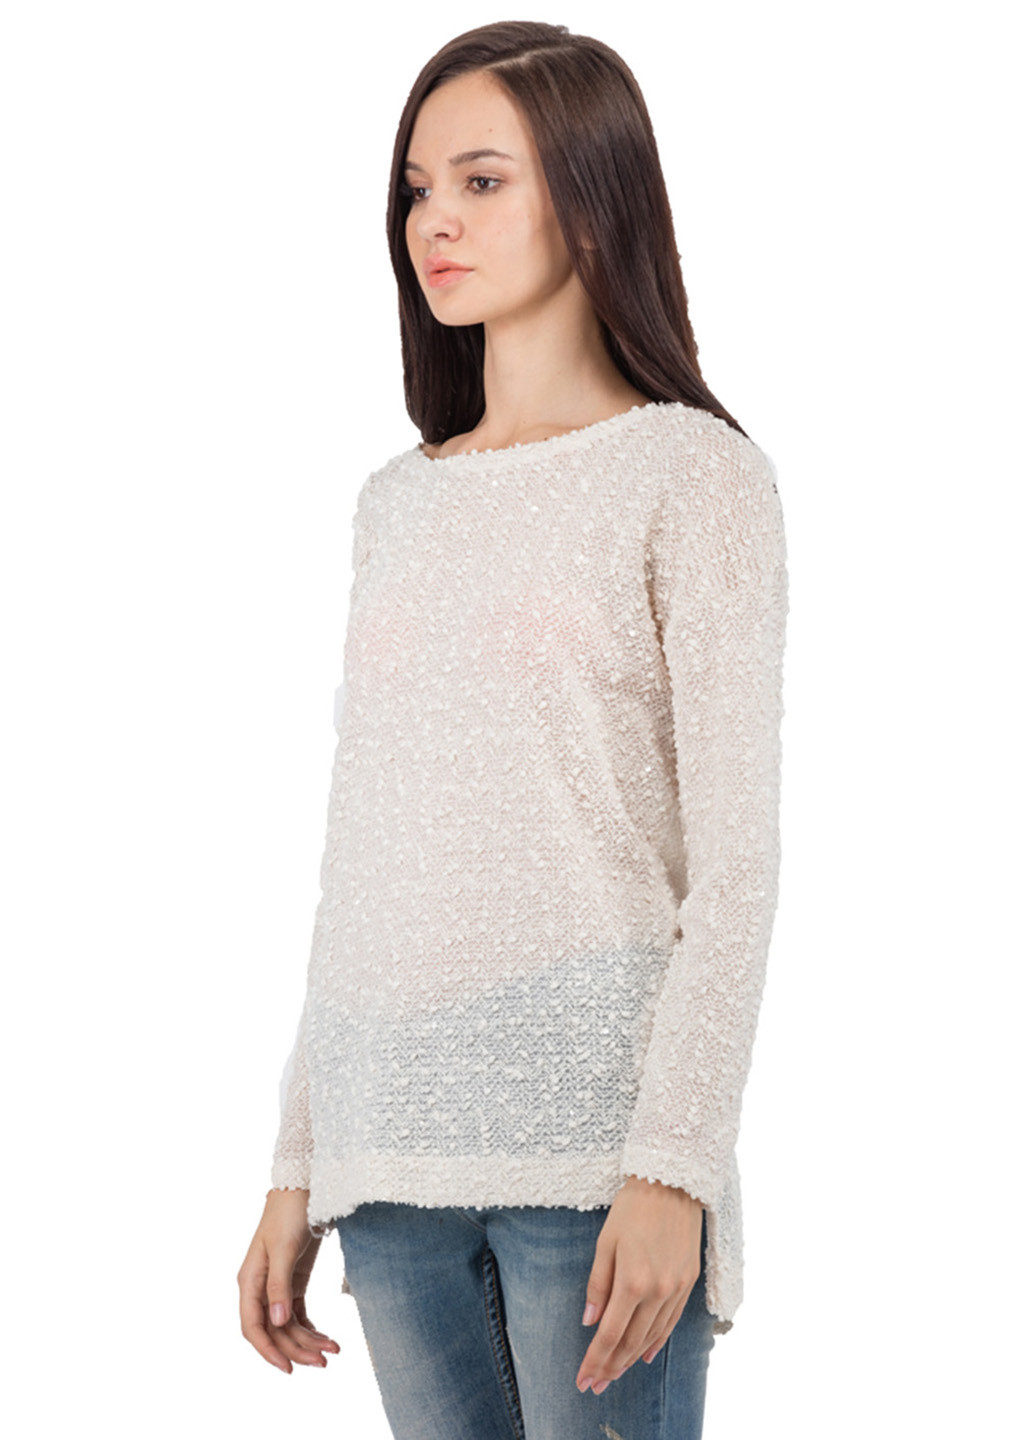 Молочный демисезонный пуловер пуловер Яavin